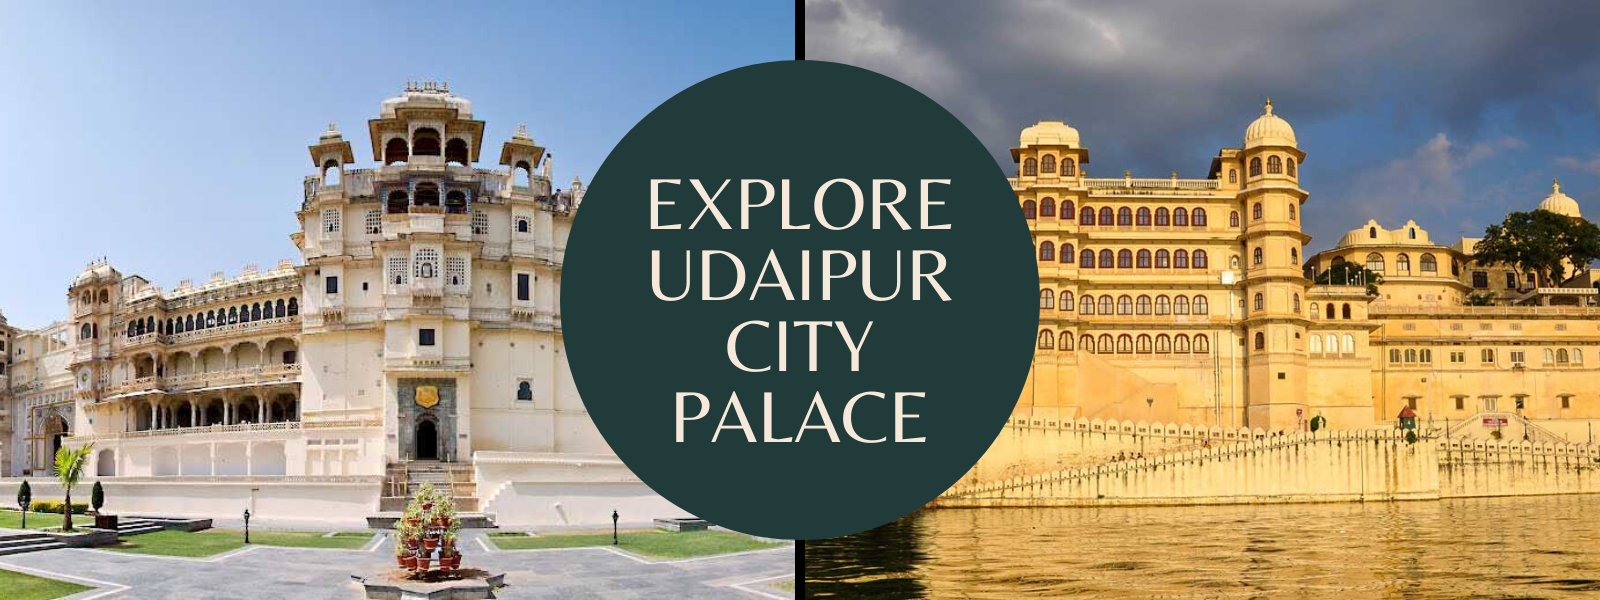 Explore Udaipur City Palace